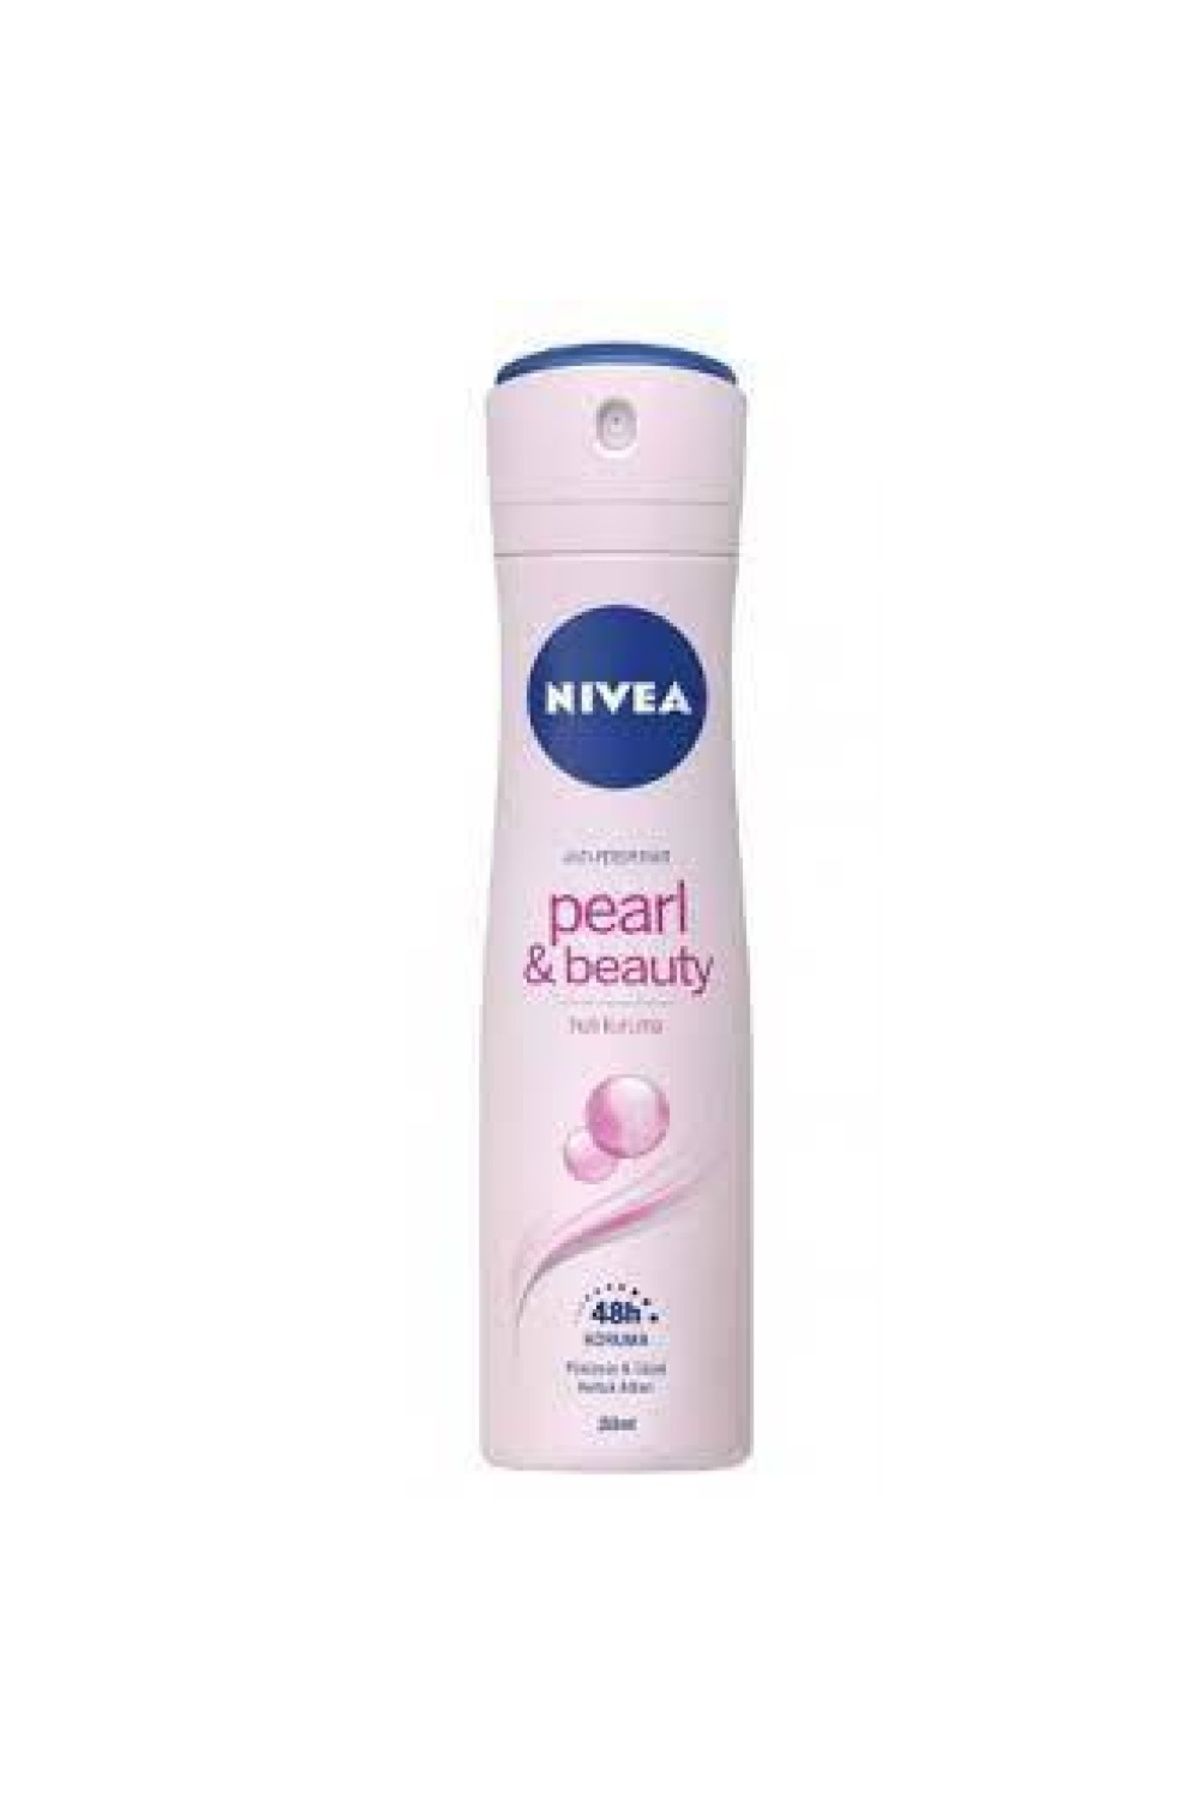 NIVEA Kadın Sprey Deodorant Pearl & Beauty 150ml,48 Saat Anti-perspirant Koruma